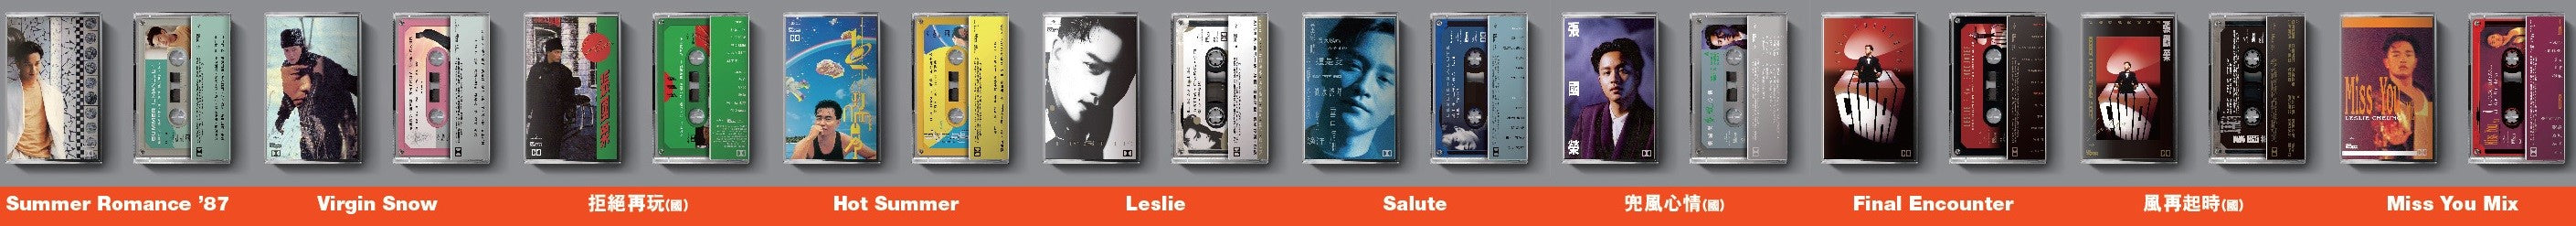 卡式張國榮錄音帶大系(10-Cassette+Player)-張國榮 Leslie Cheung